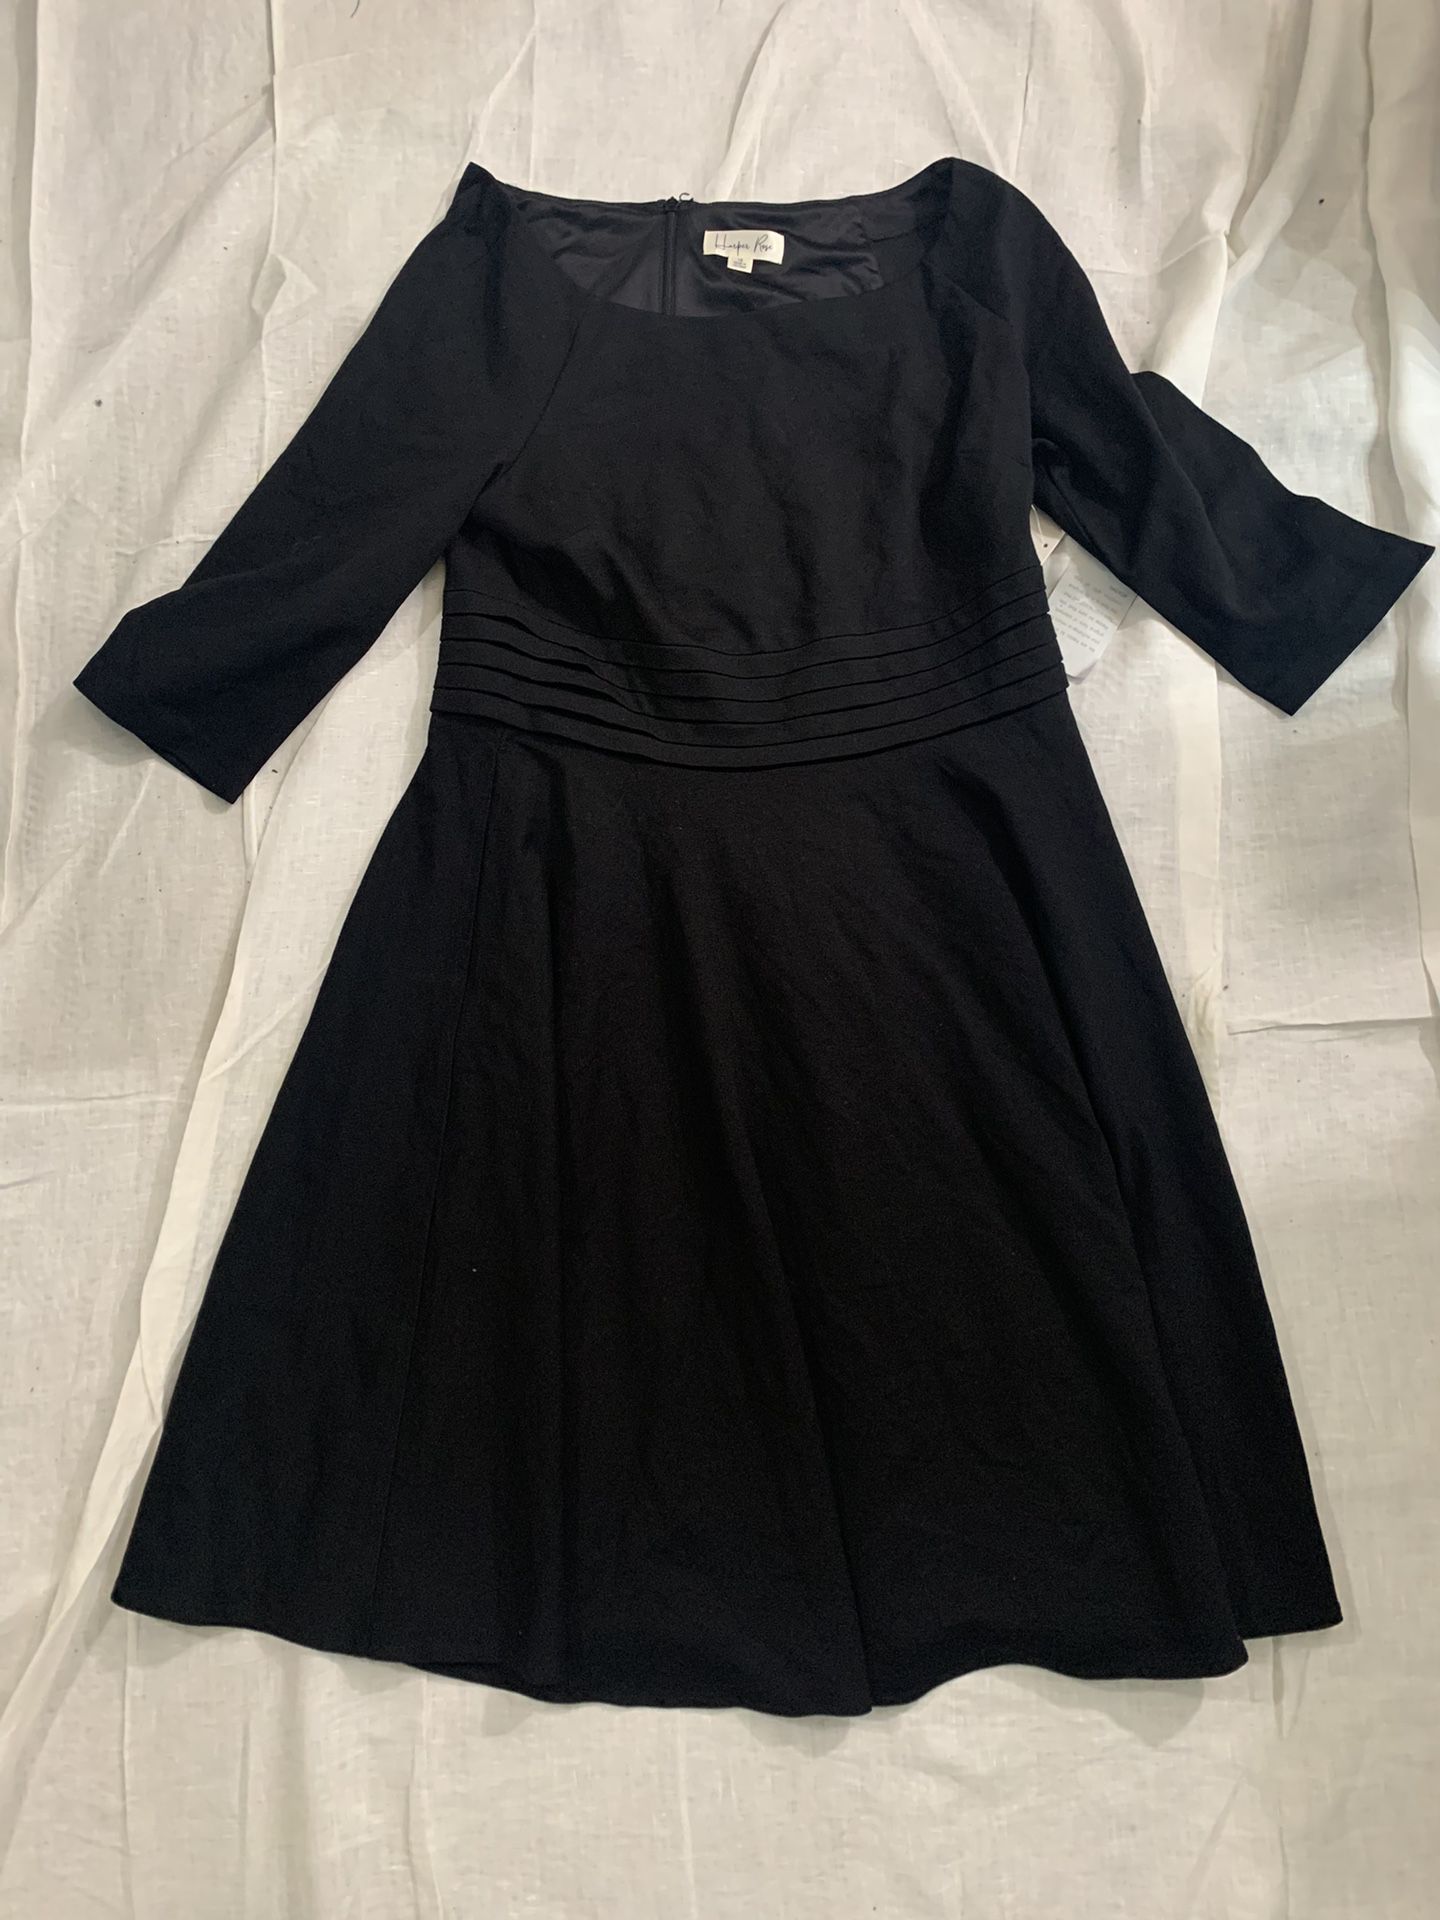 HARPER ROSE Women Black Dress Size 16  New